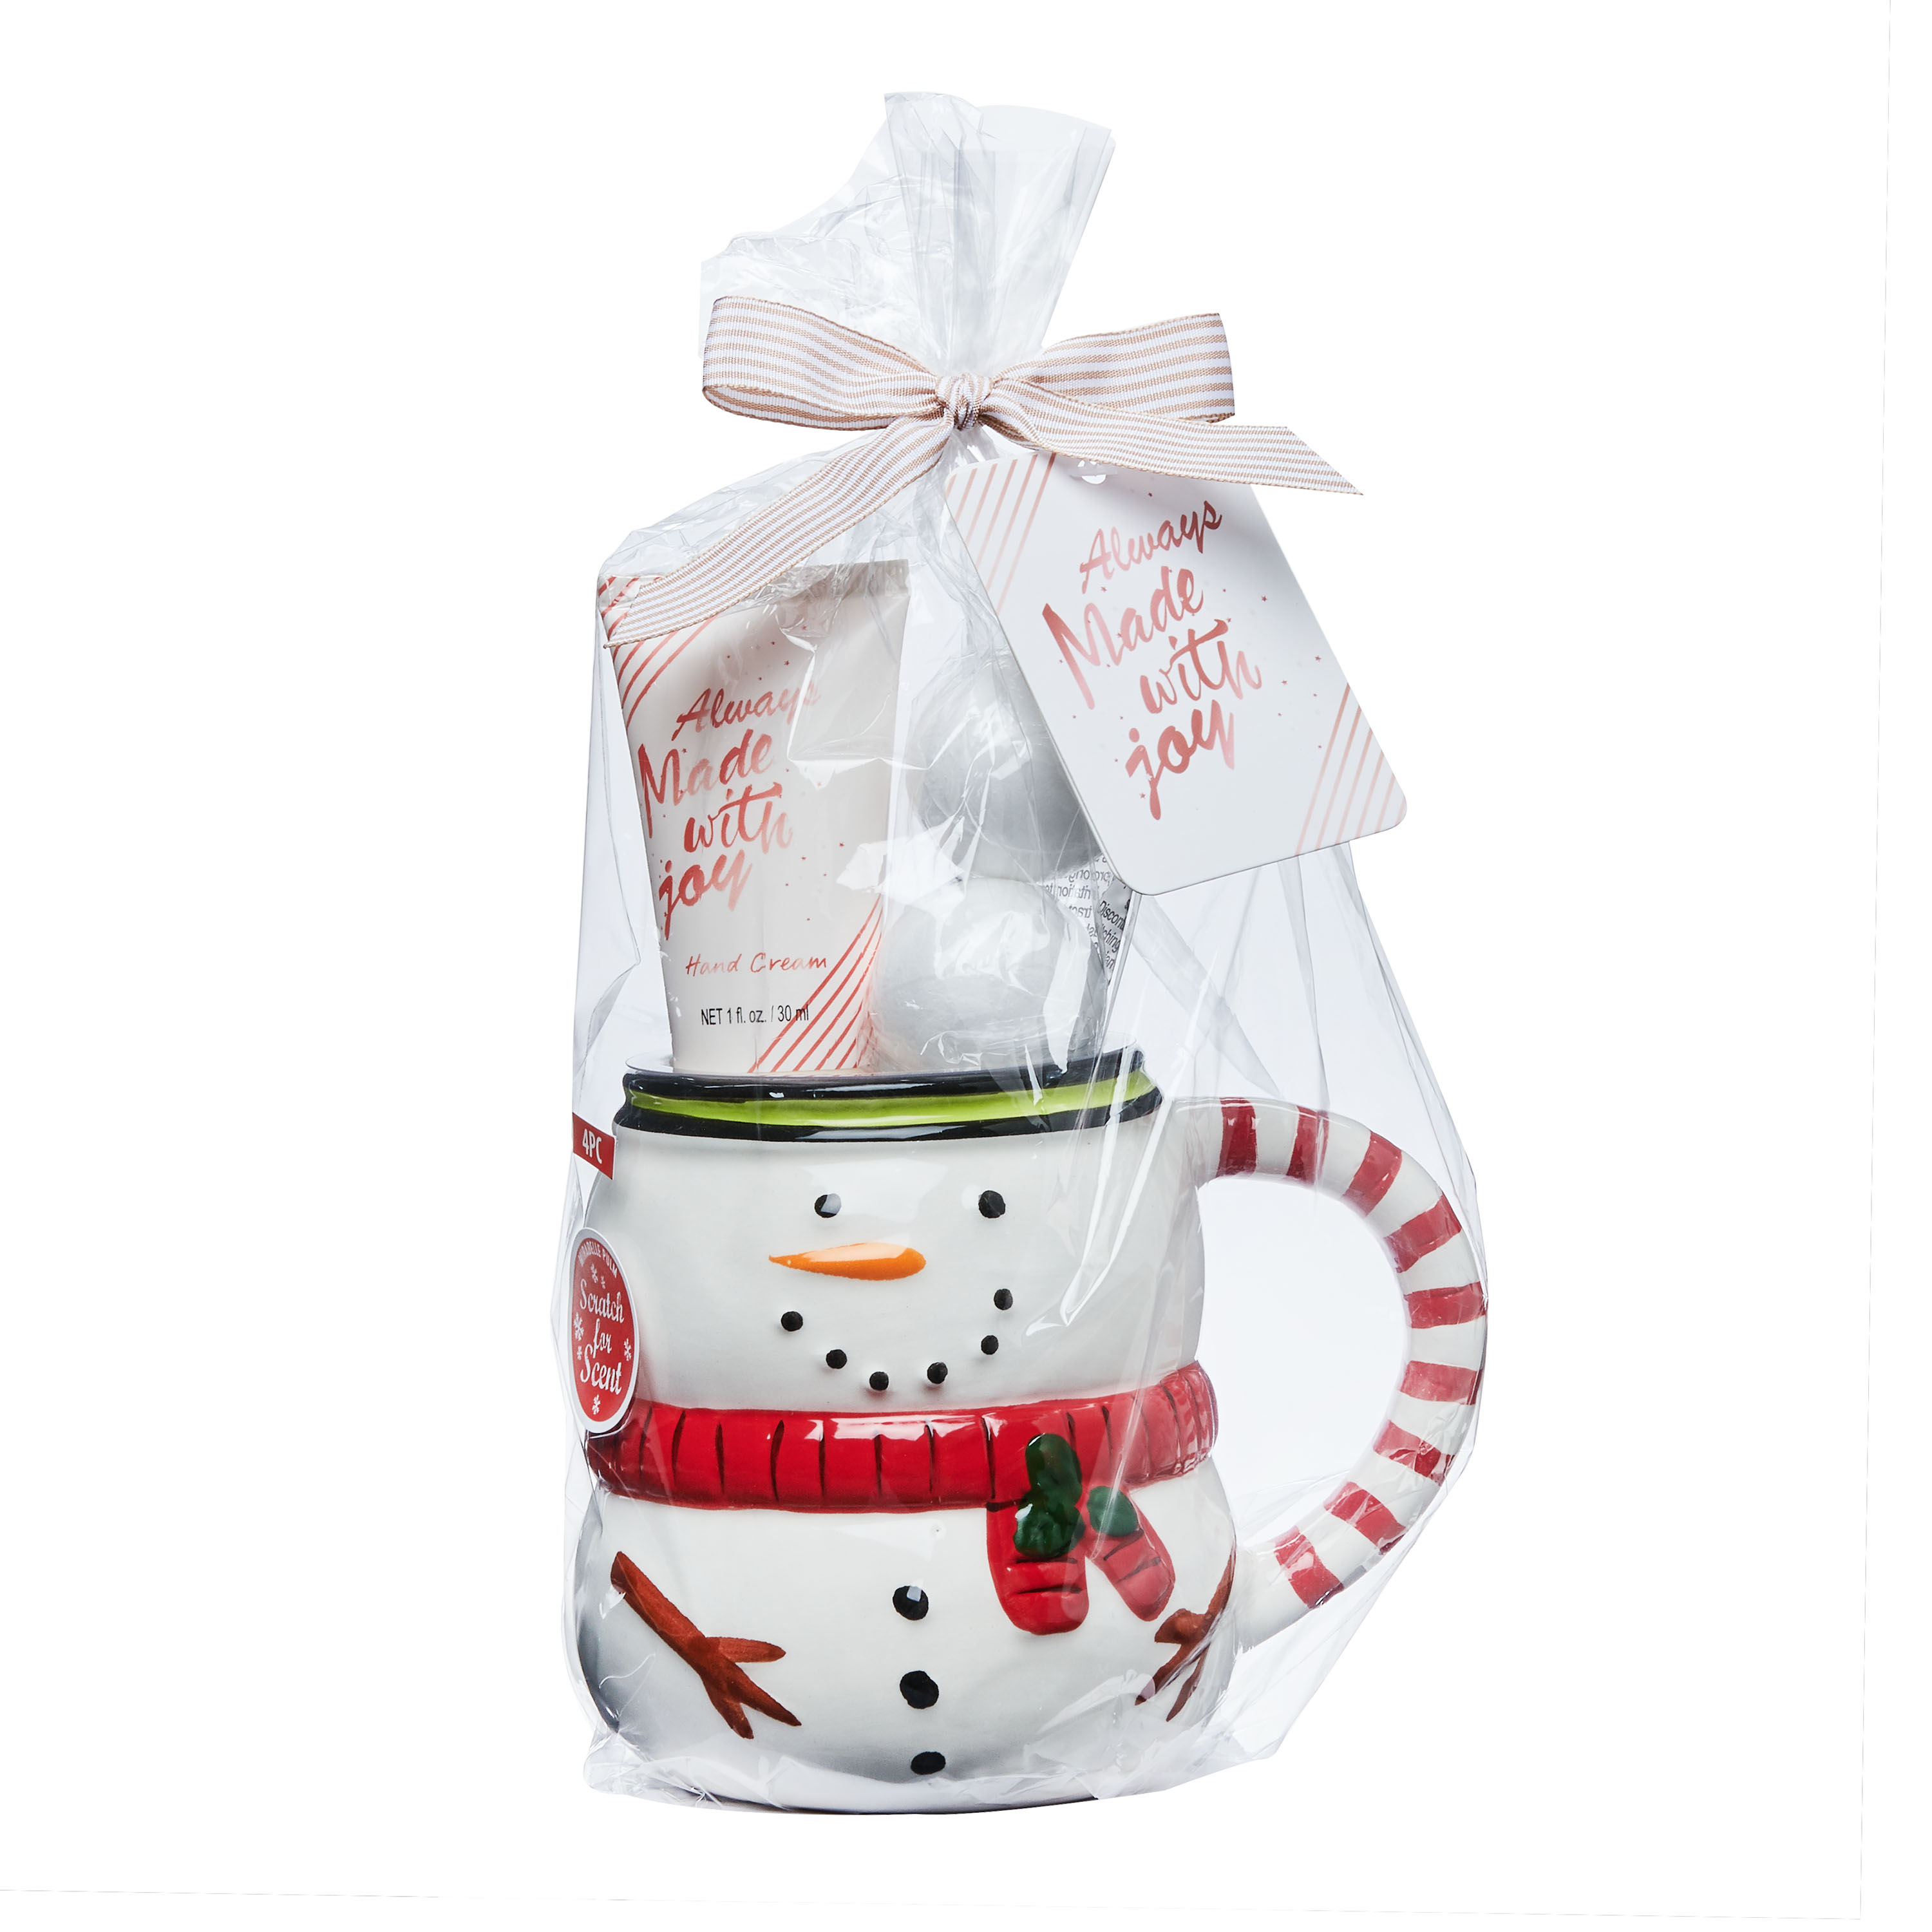 Always Made with Joy 4-Piece Snowman Mug, Hand Cream and Bath Fizzer Gift Set - image 1 of 4